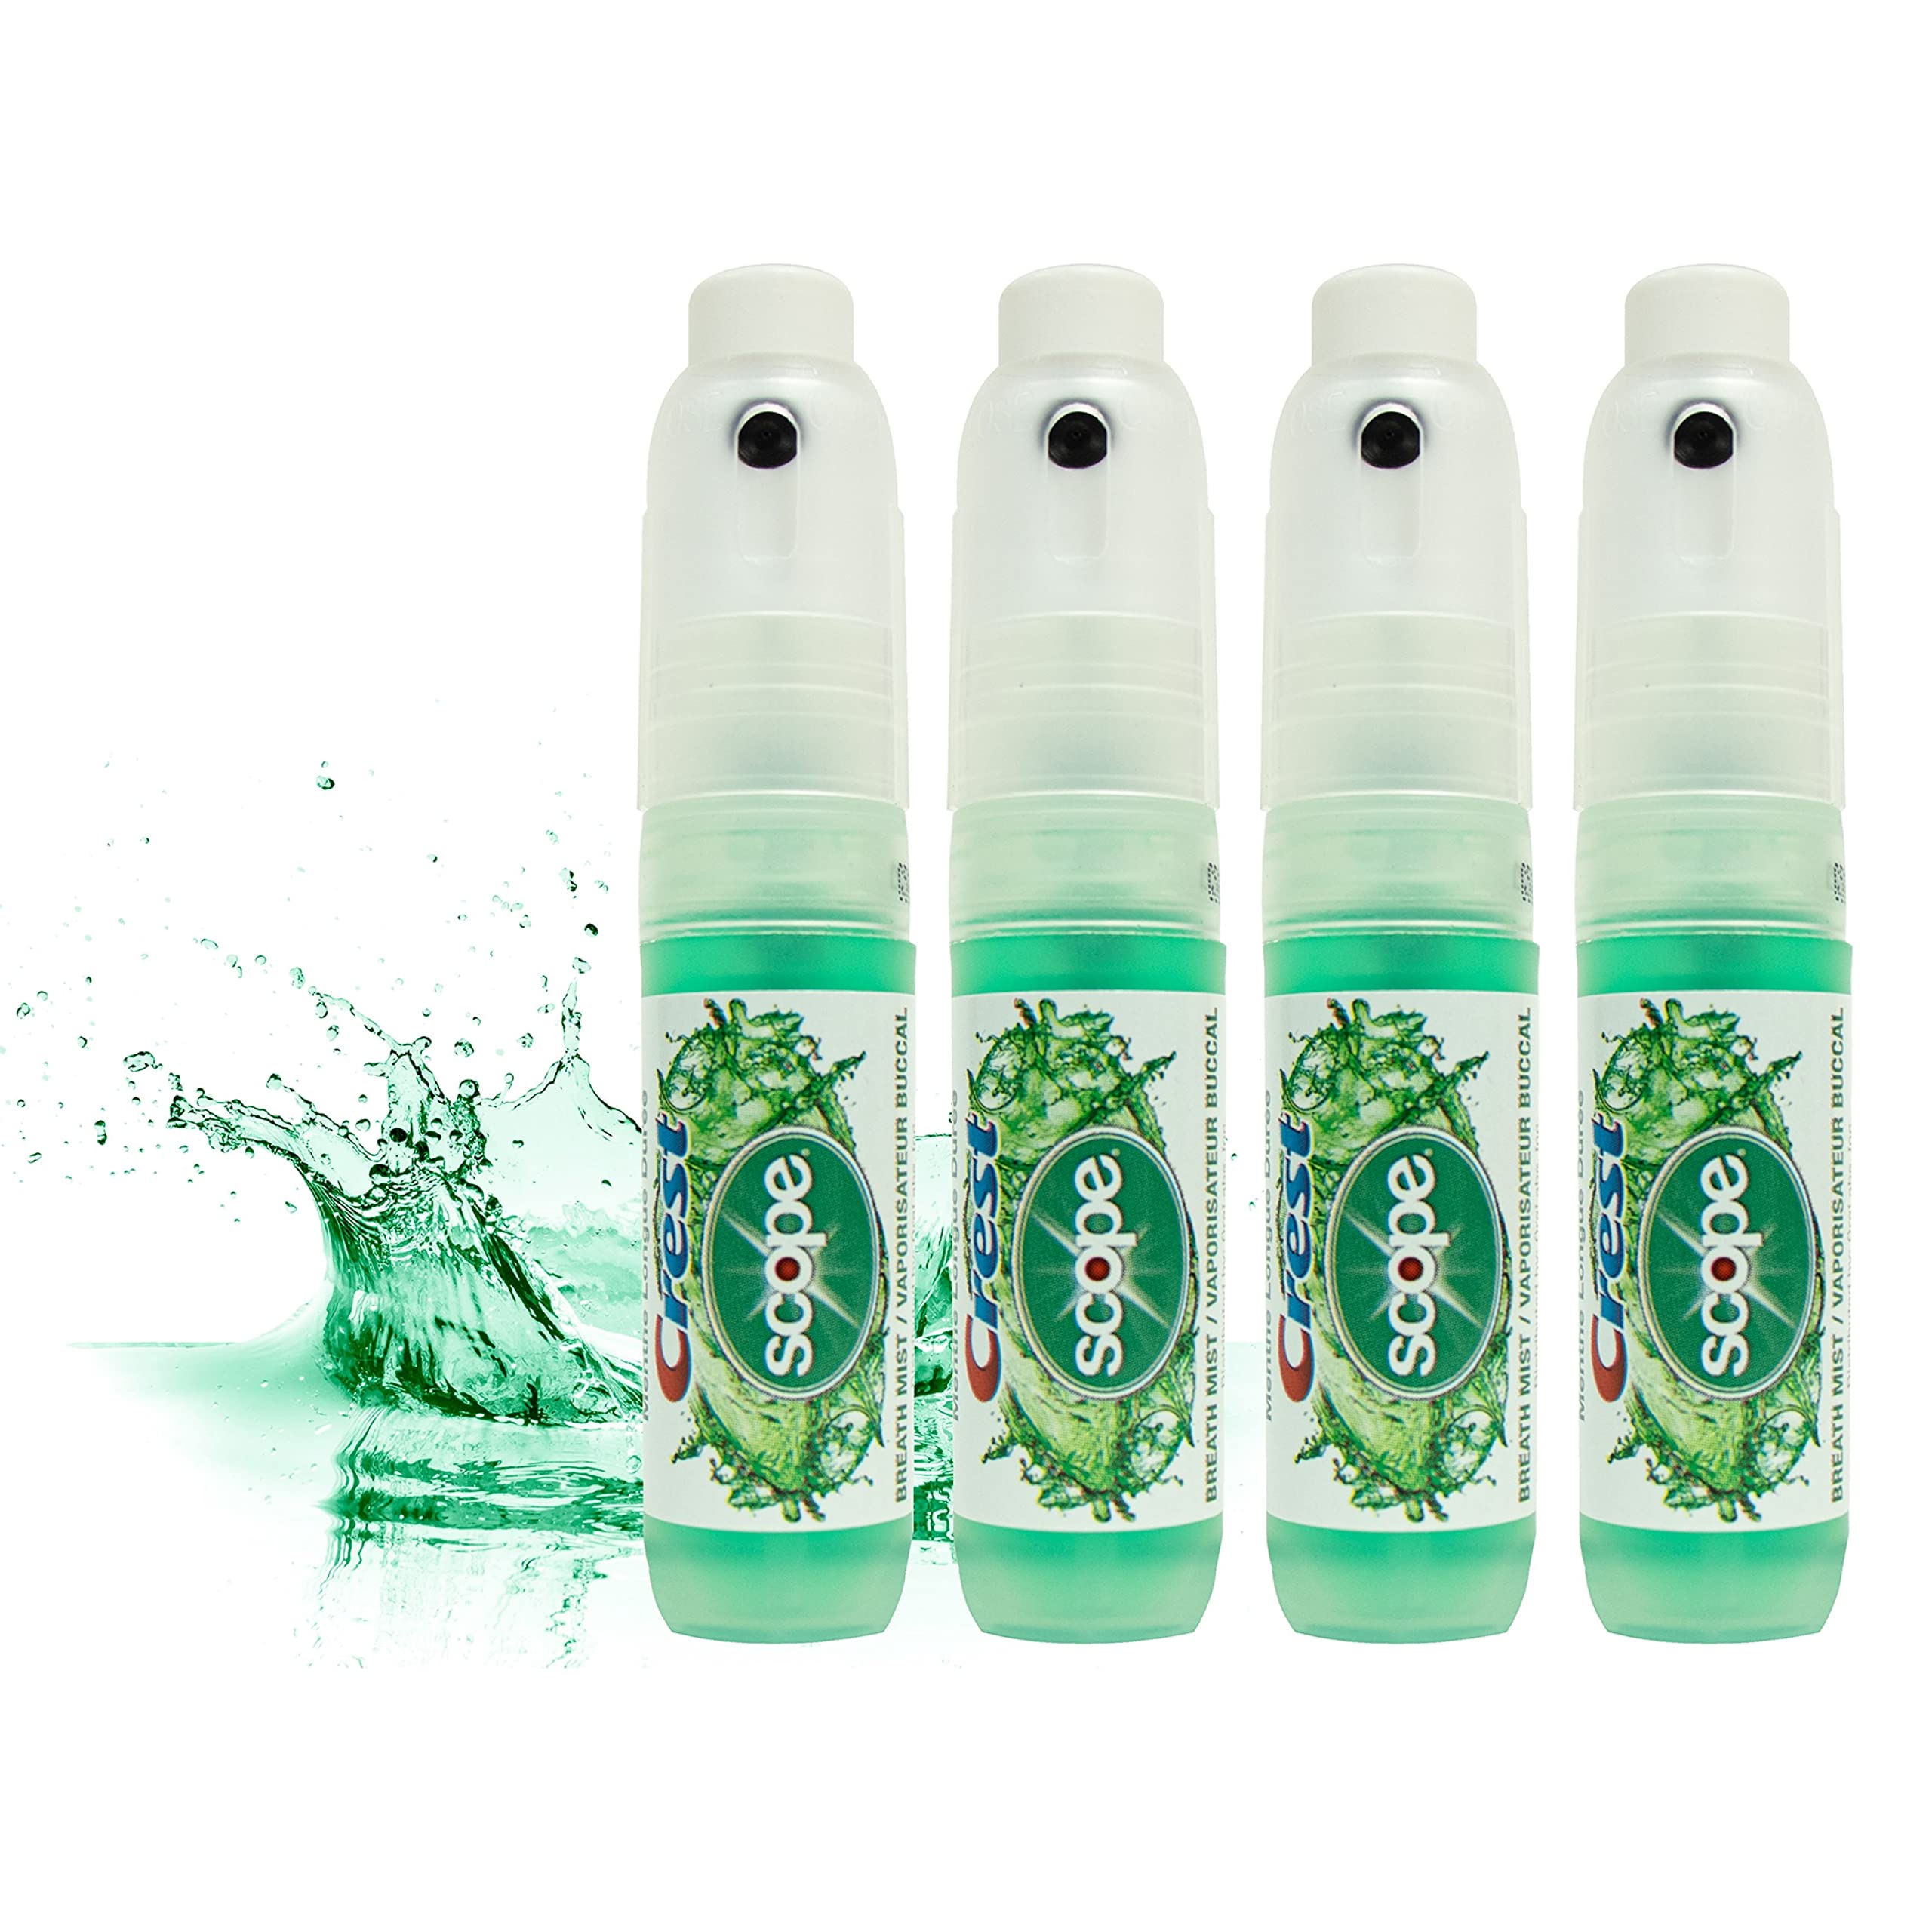 Crest Scope | One 4-Pack of Mint Breath Mist Sprays (4 Total Sprays) - 0.24 ounce (7mL) - Made in an FDA Audited USA Facility